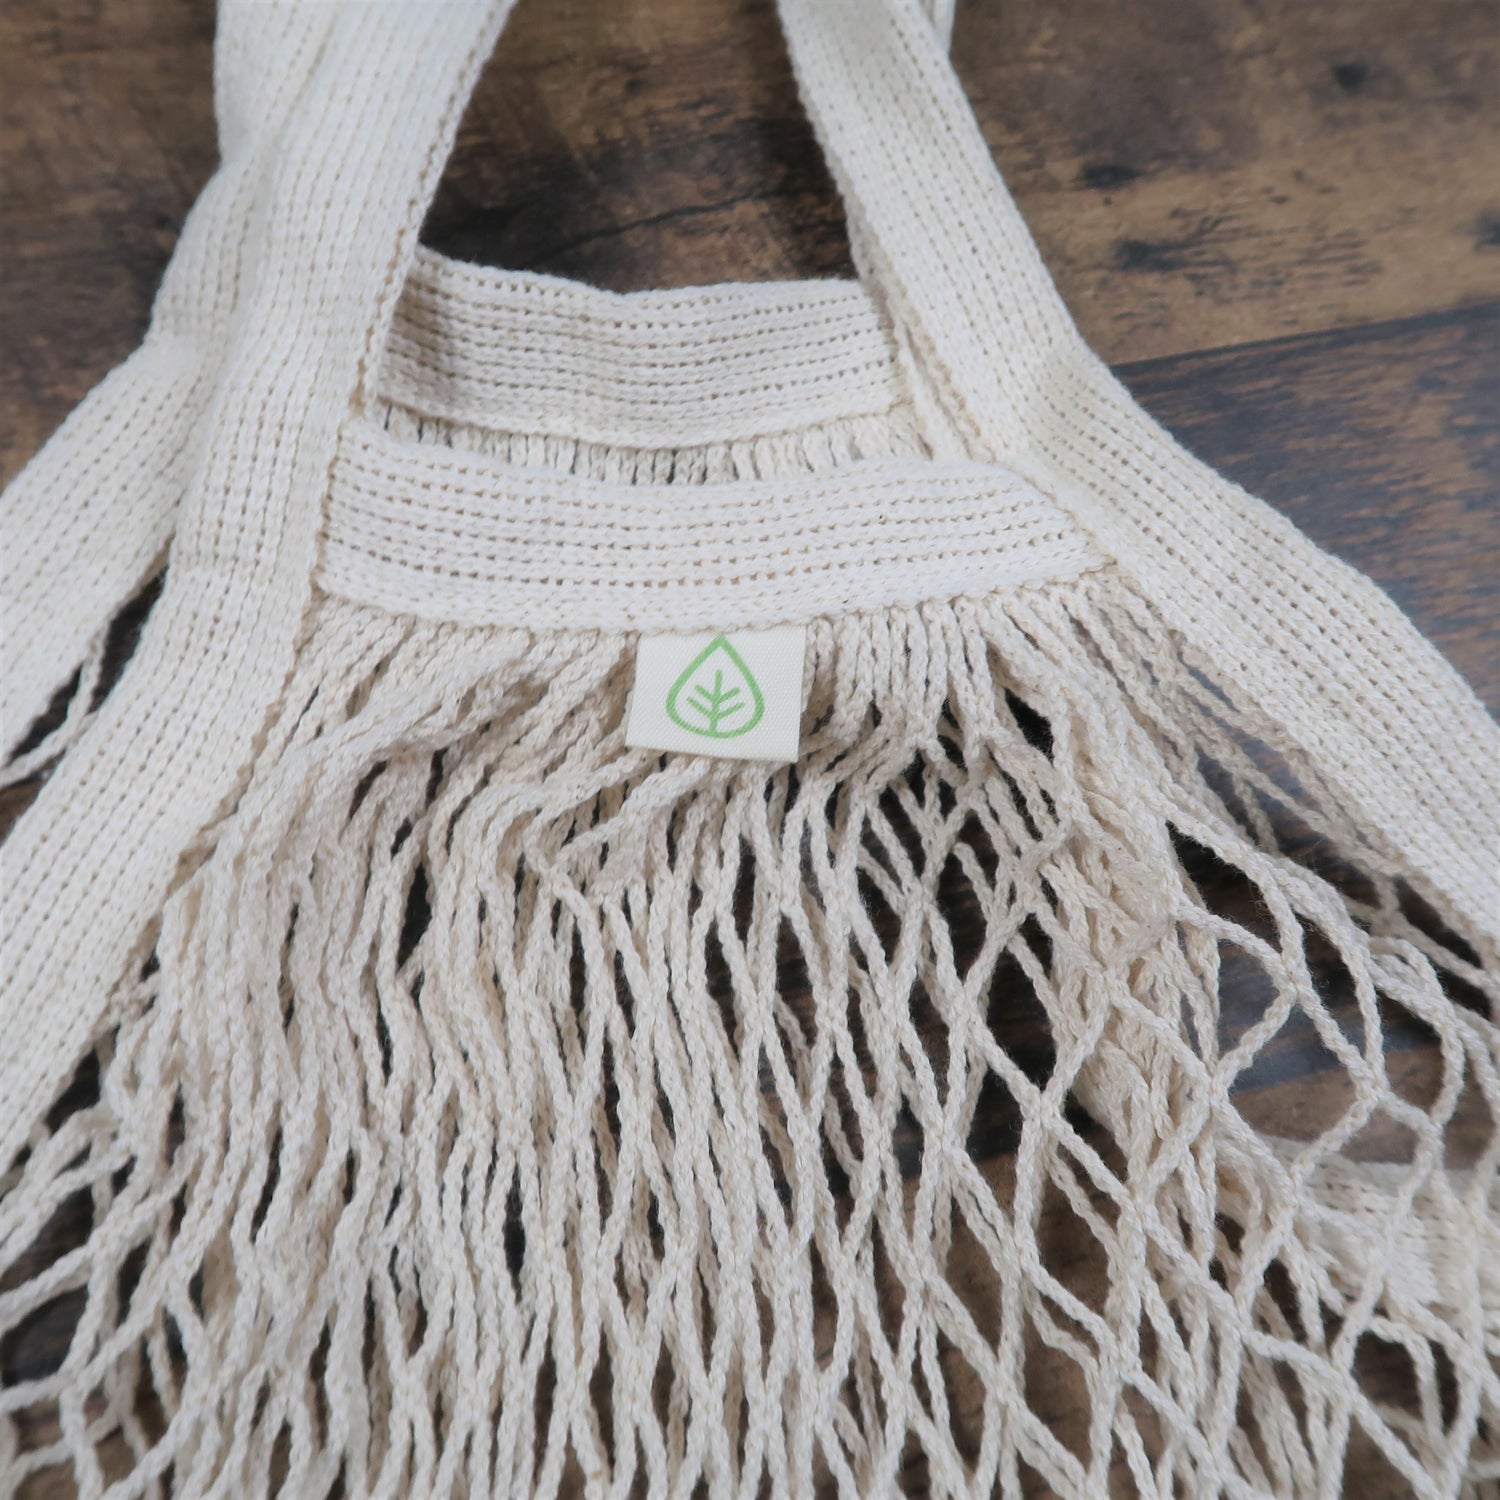 Plantish - Organic Net Tote Bag